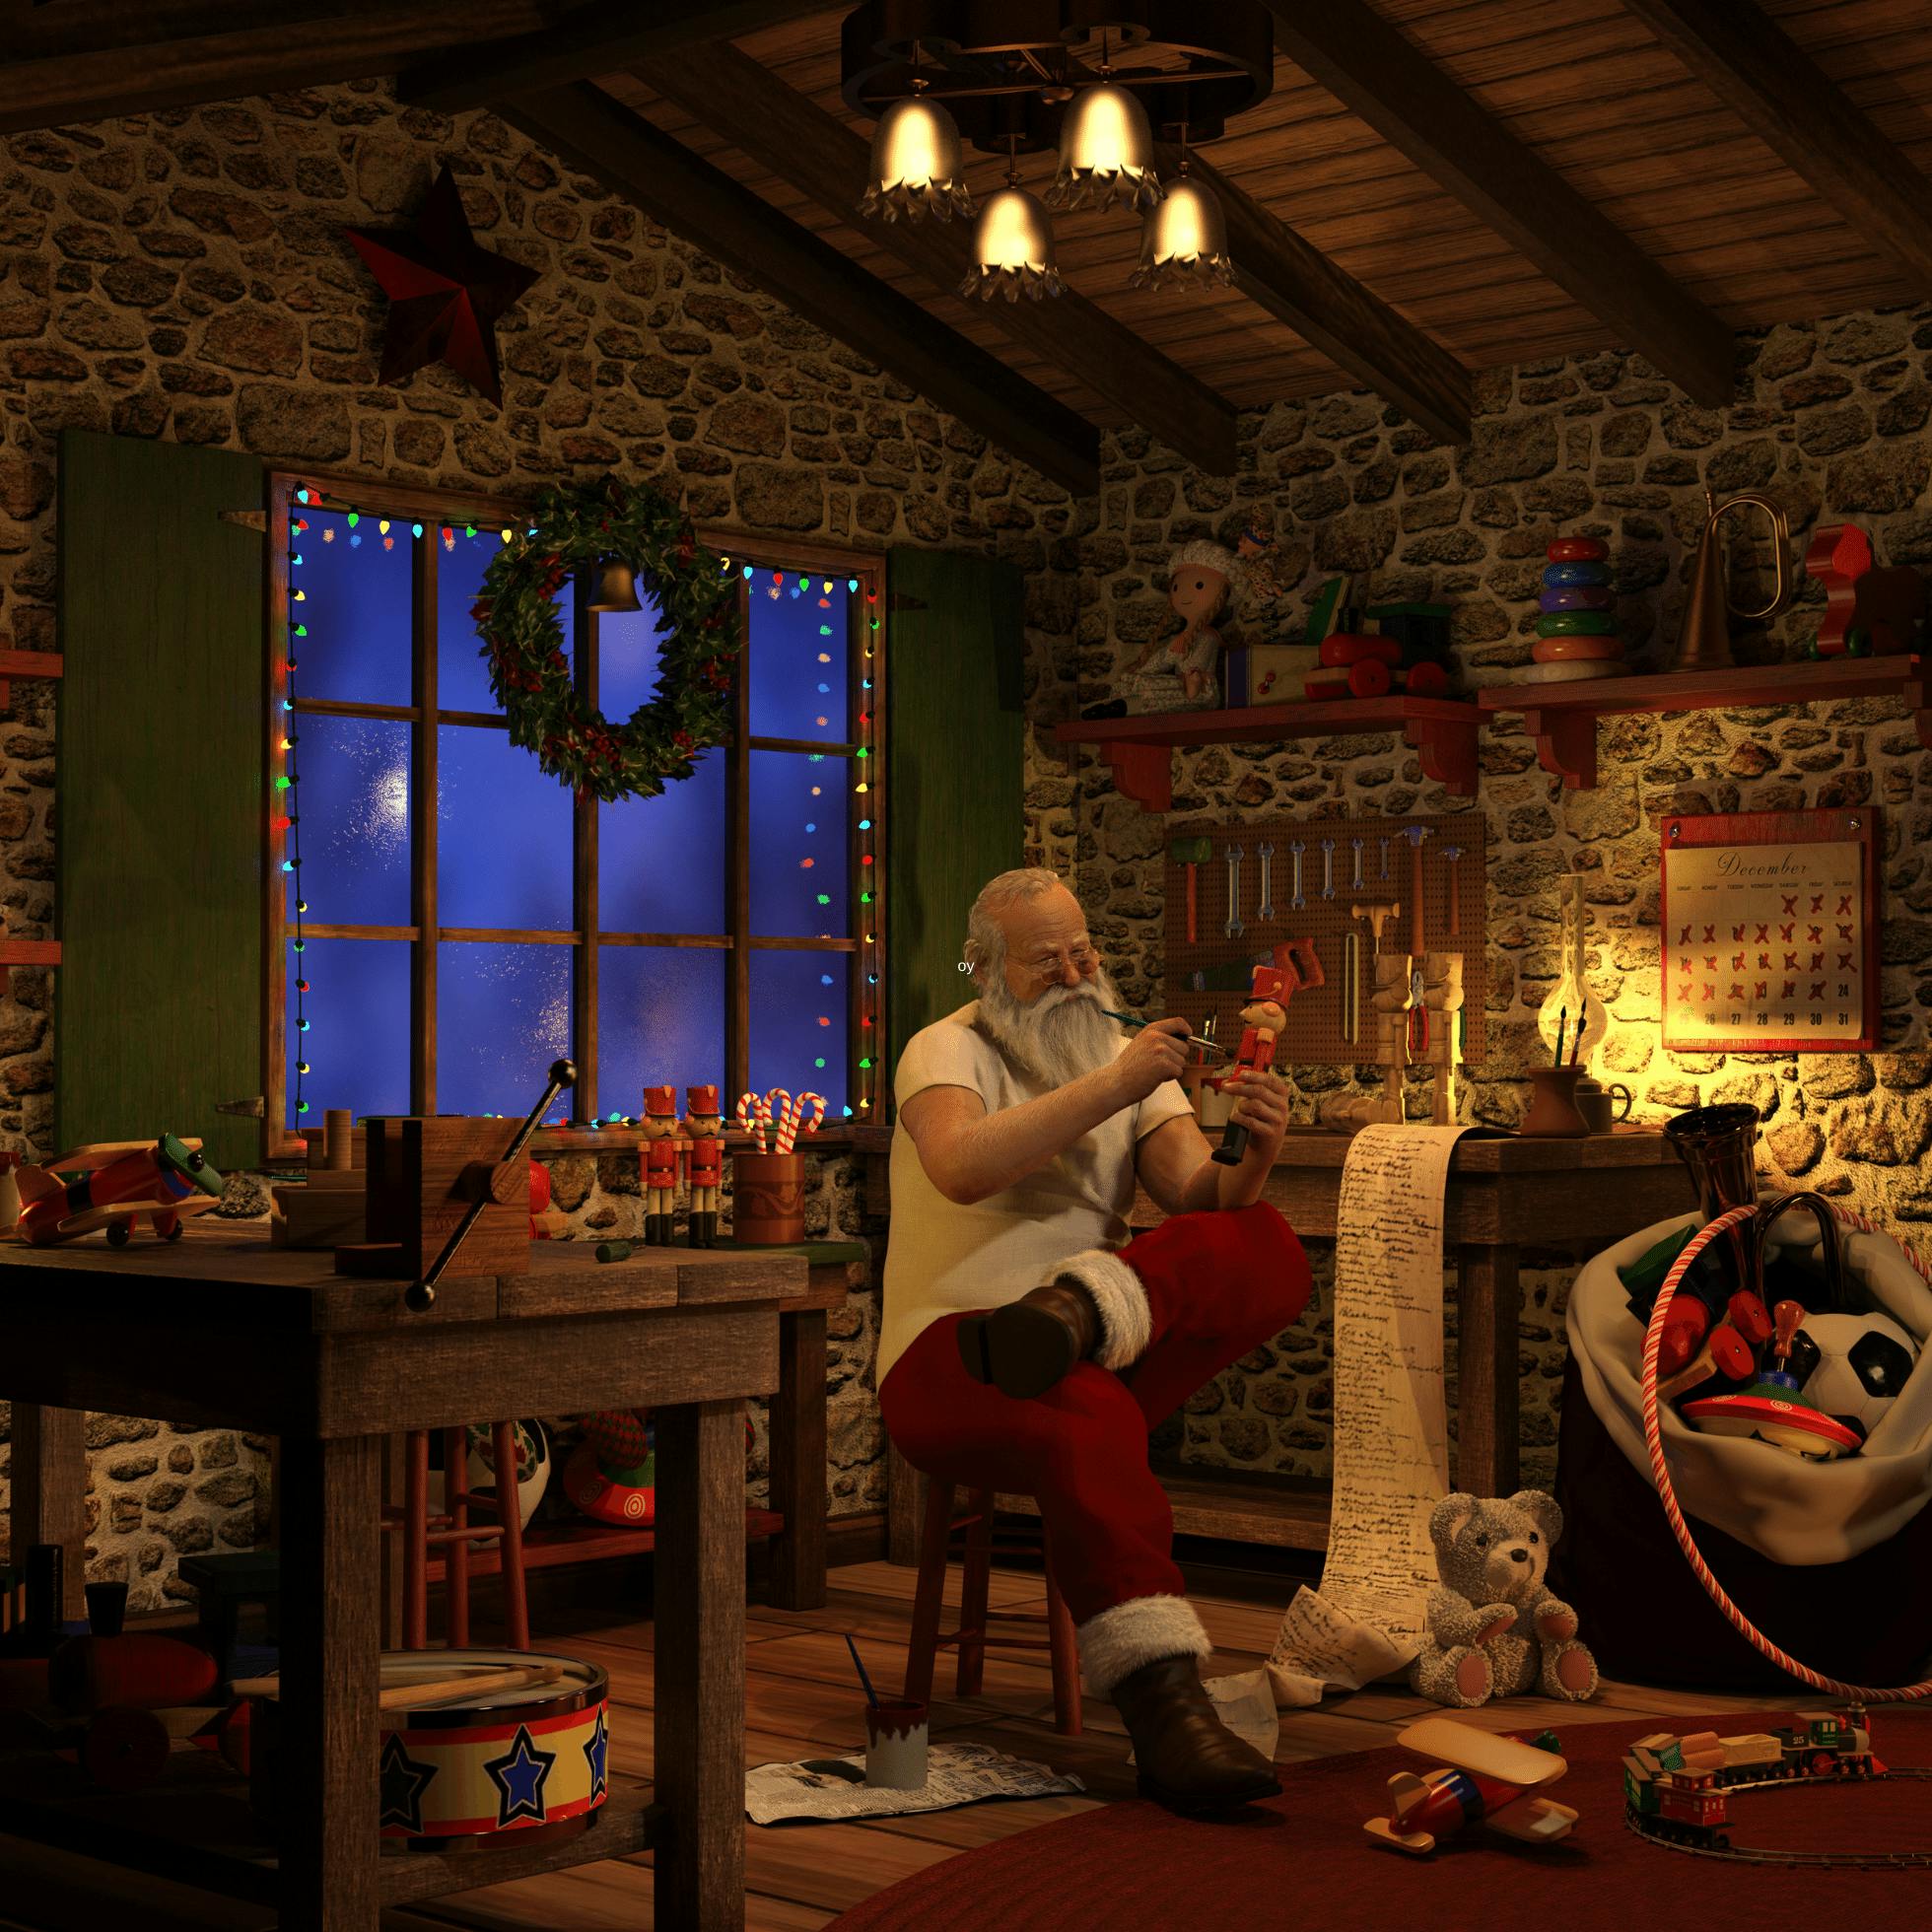 Santa's Enchanted Workshop